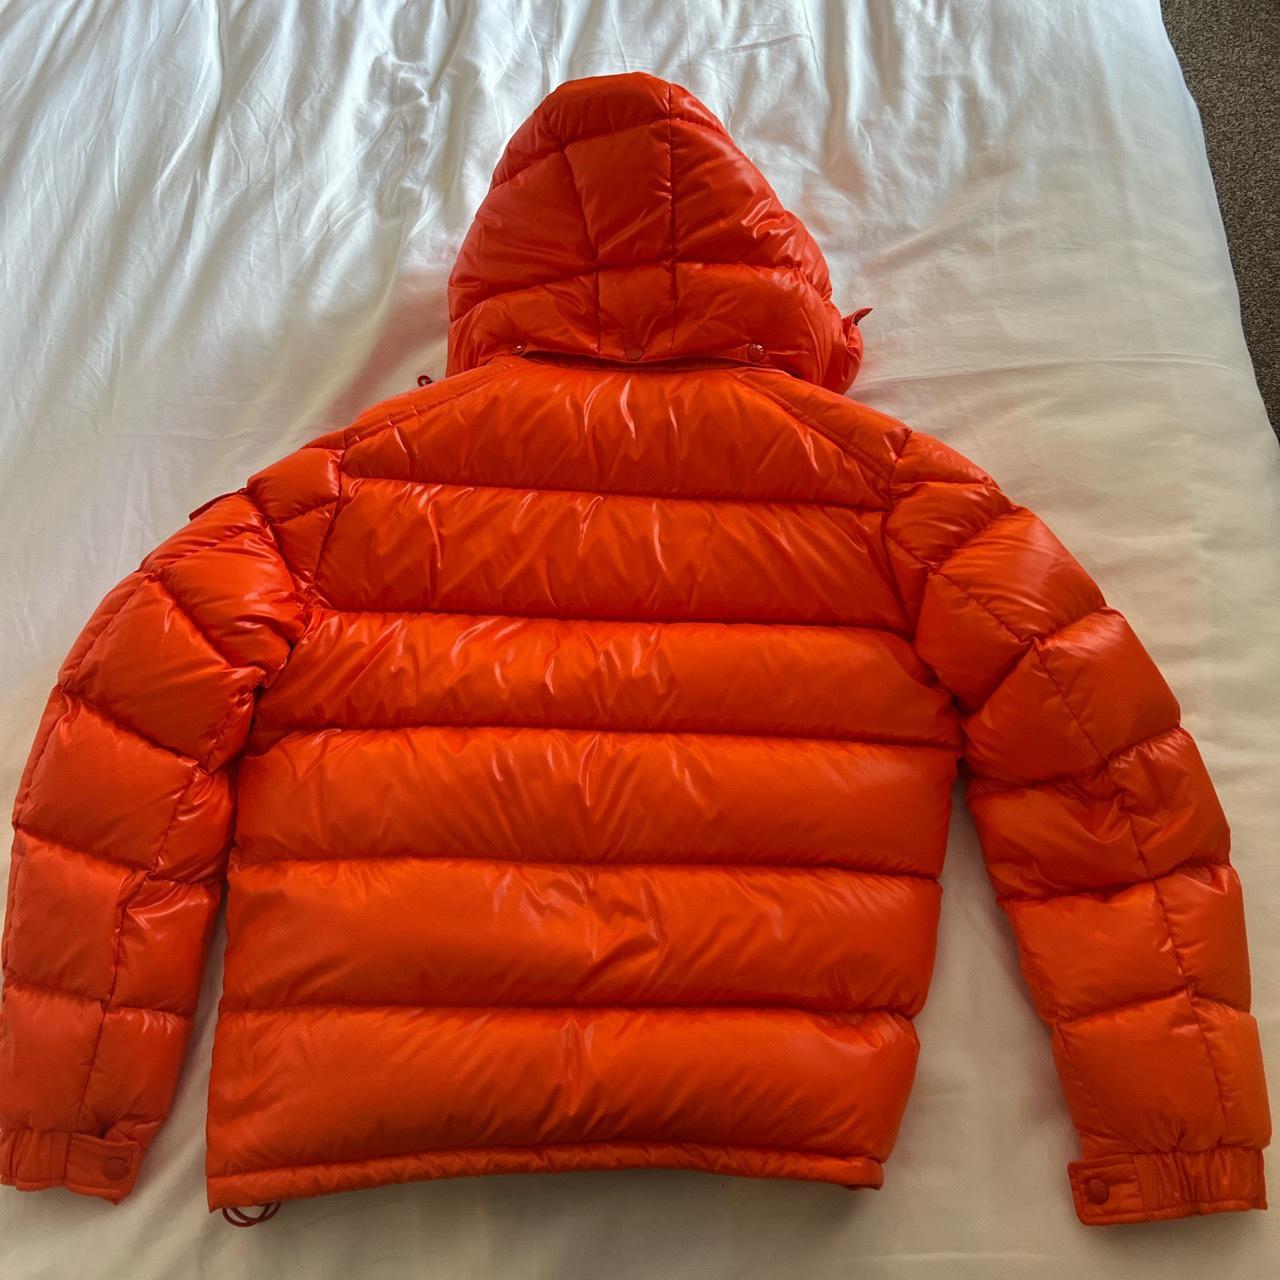 Moncler maya orange jacket Very good condition - Depop